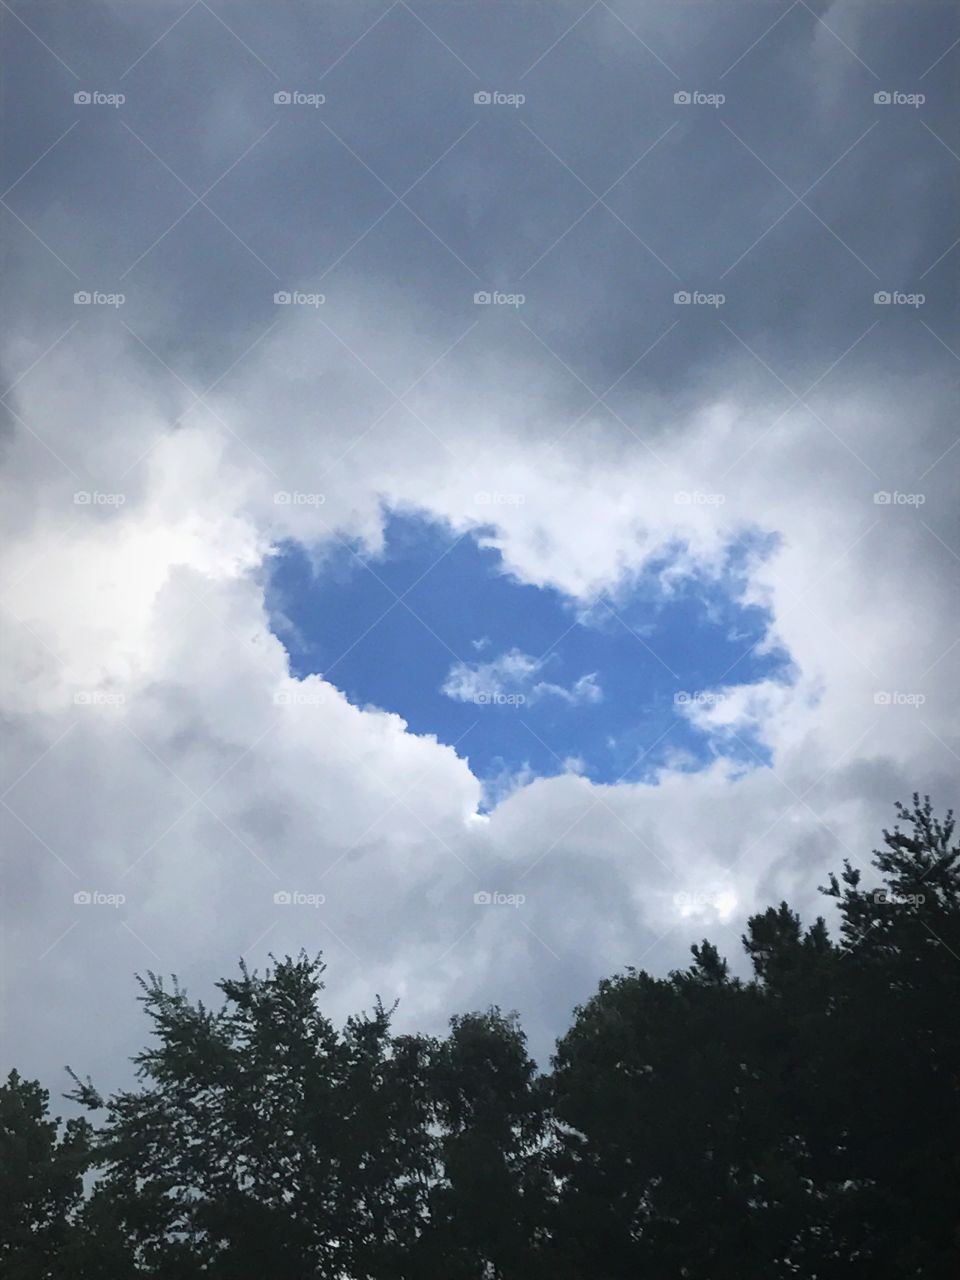 Heart in the sky